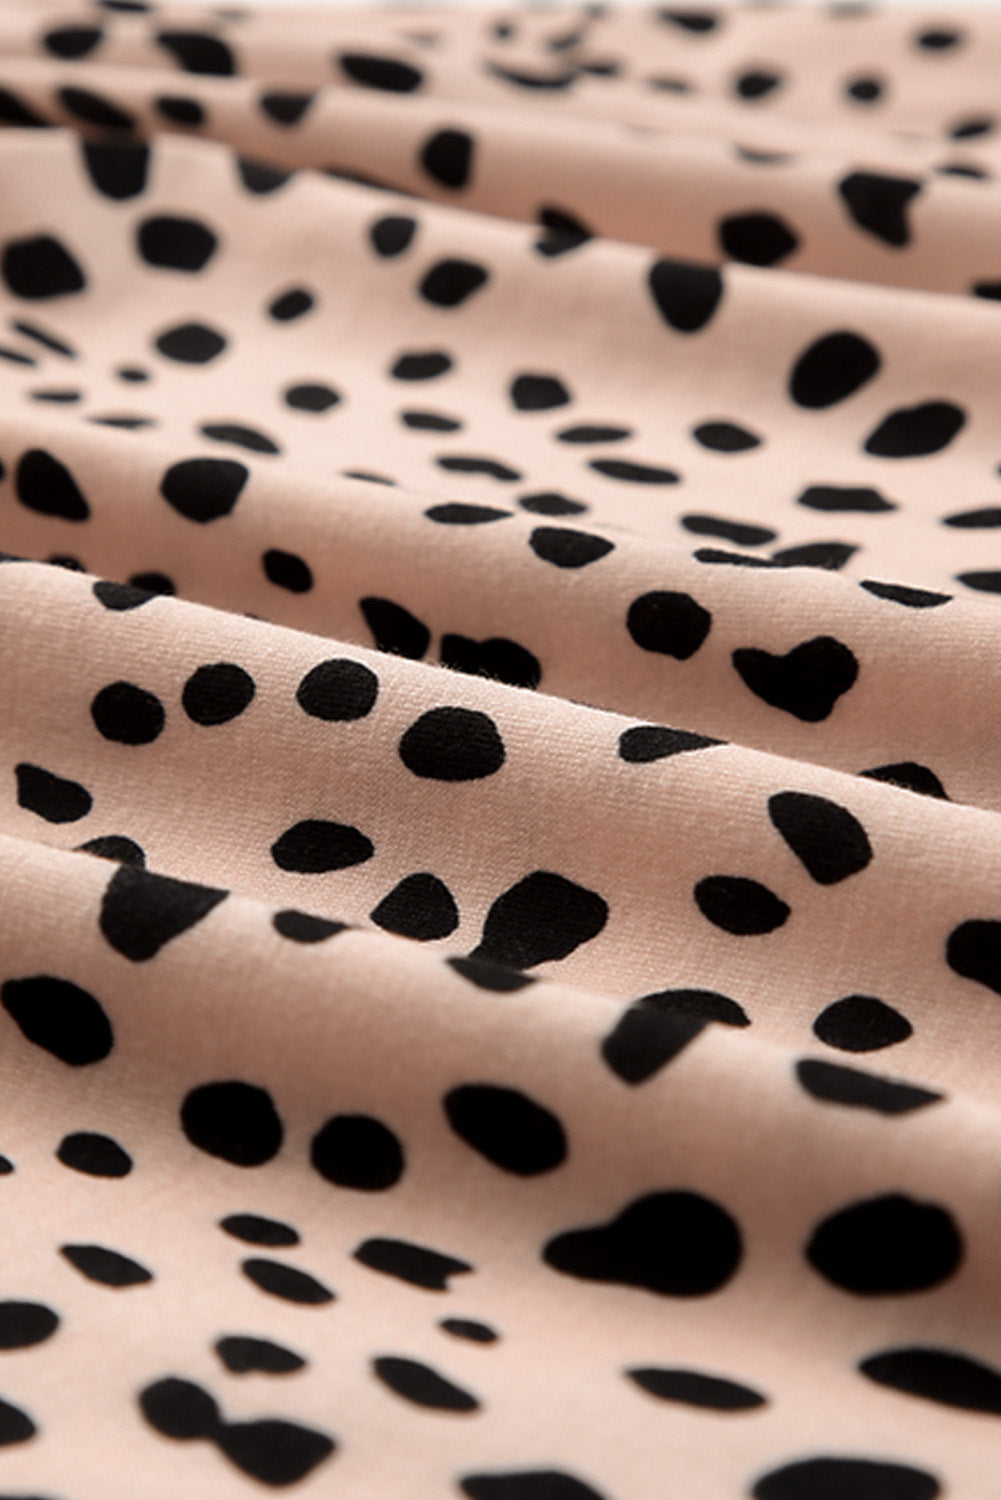 Leopard Print Short Sleeve Tunic T-shirt Dress T Shirt Dresses JT's Designer Fashion